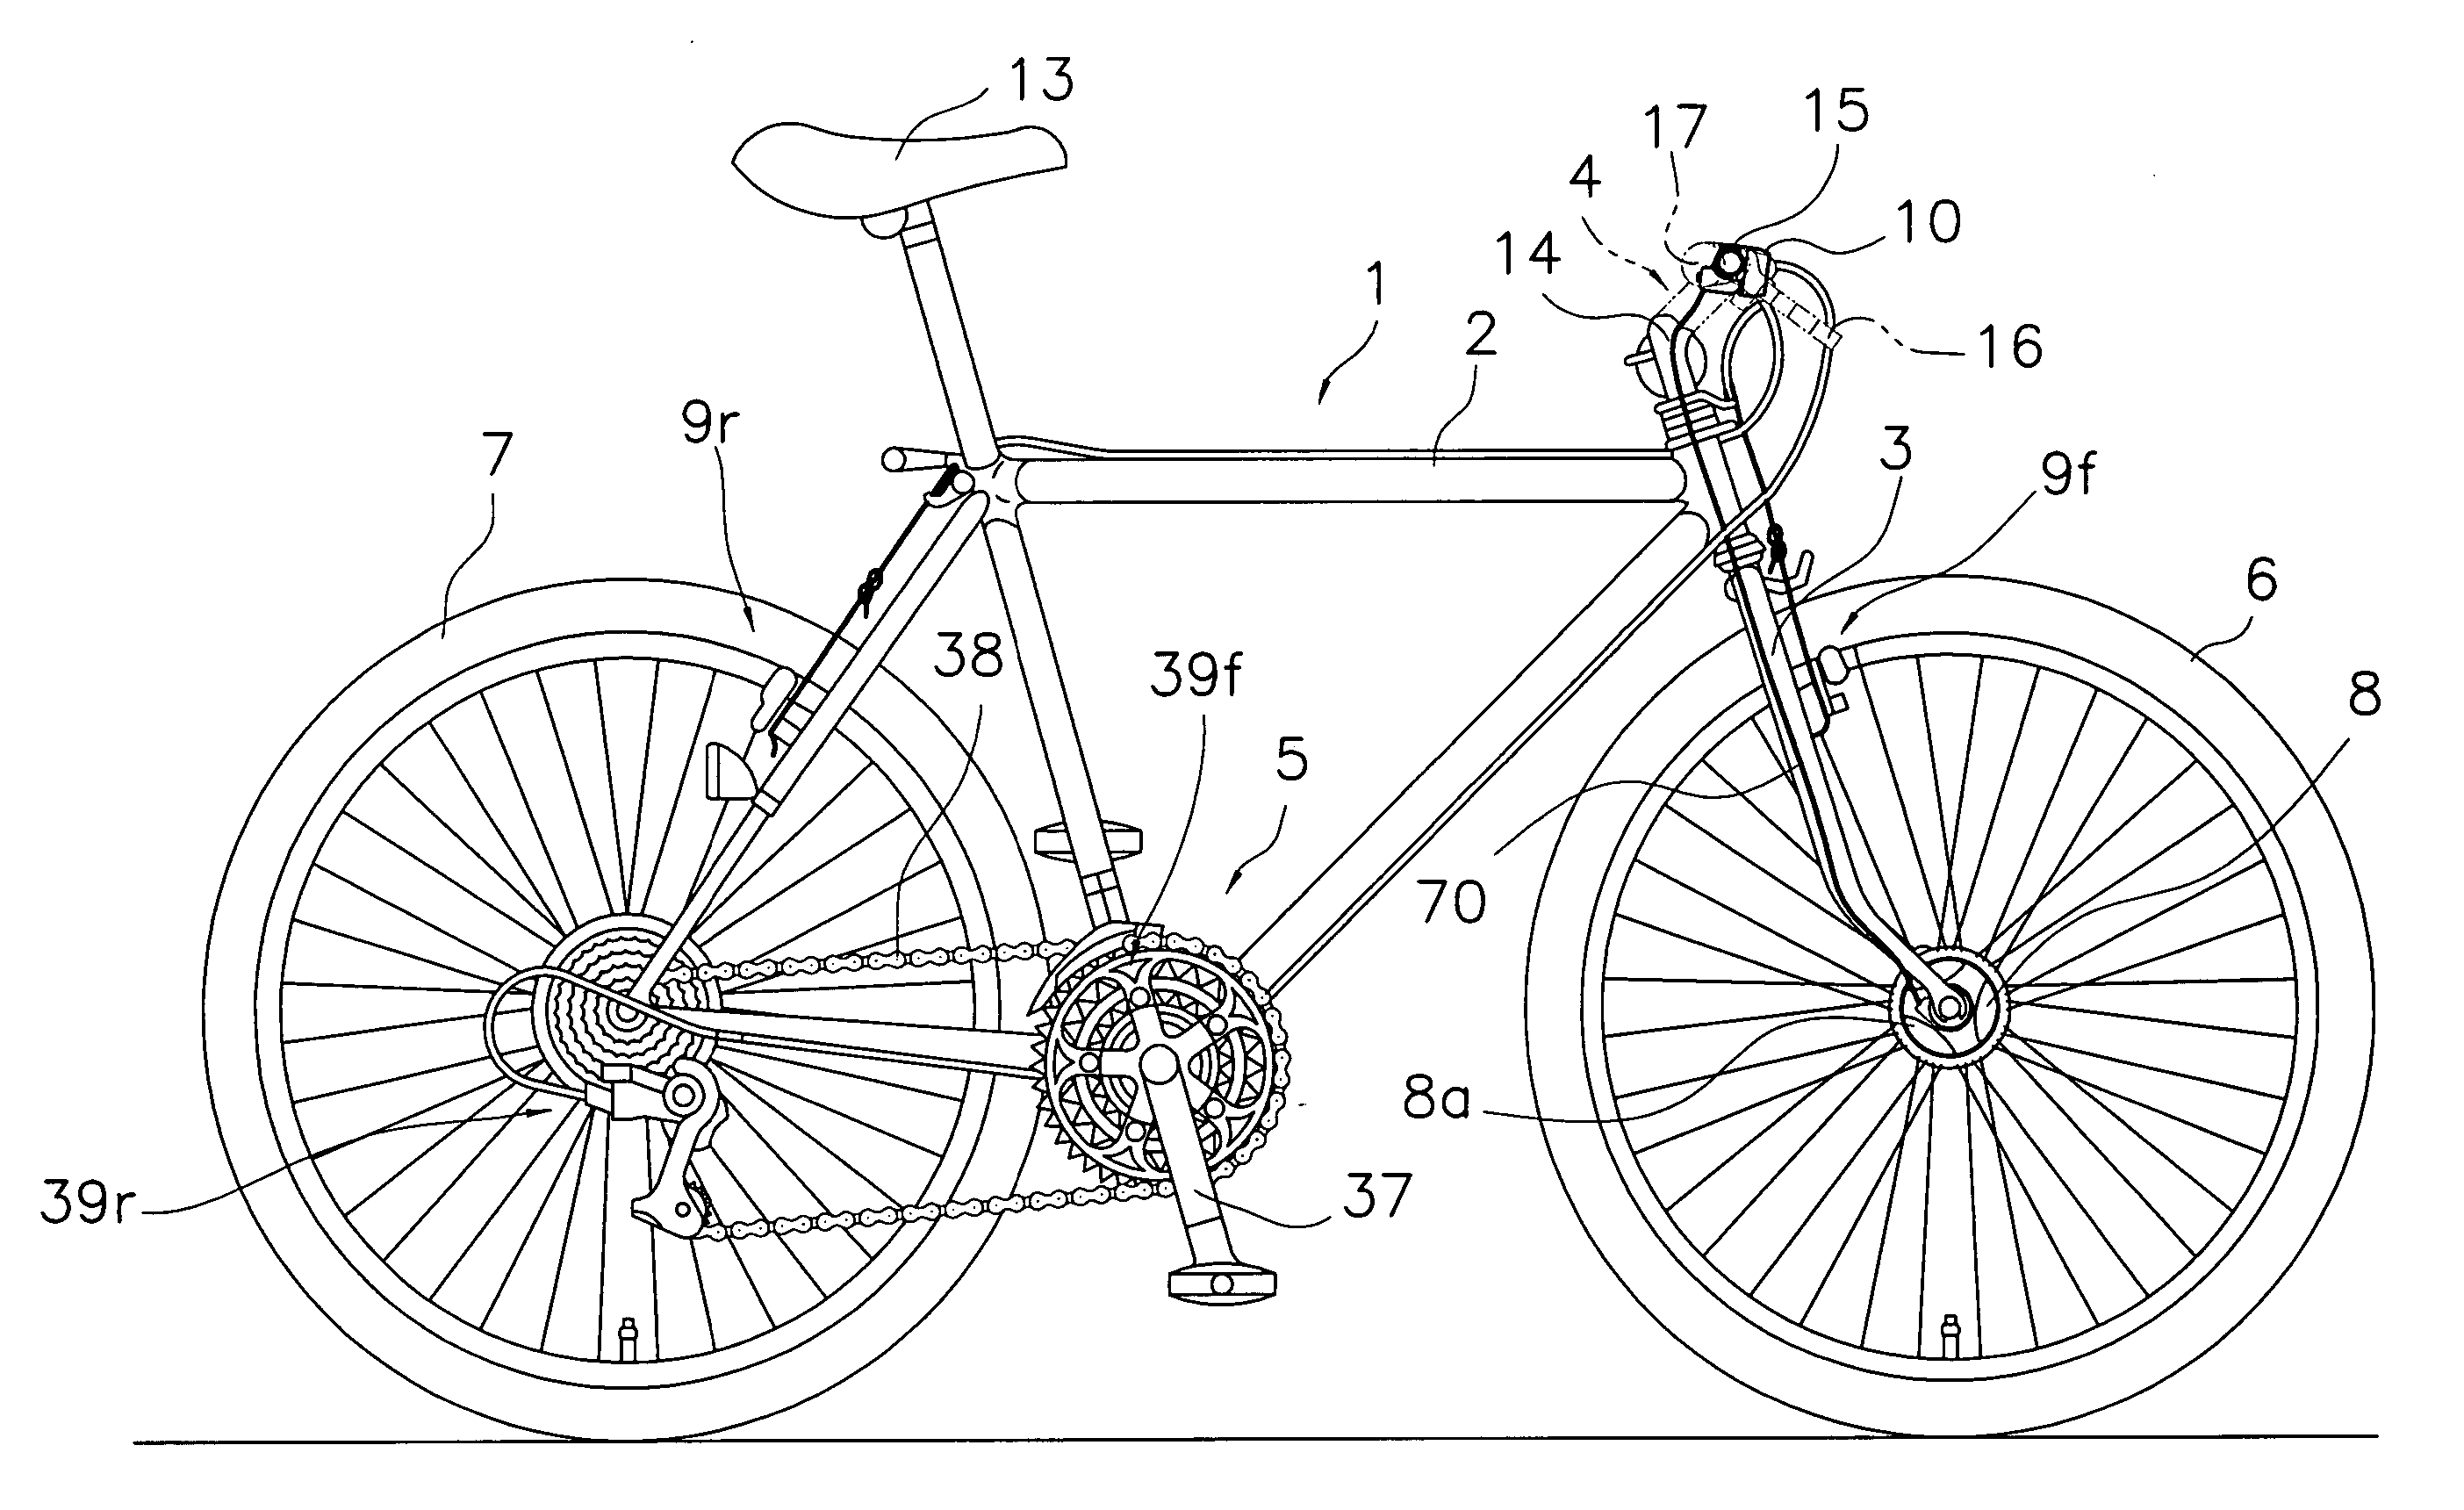 Bicycle lighting device